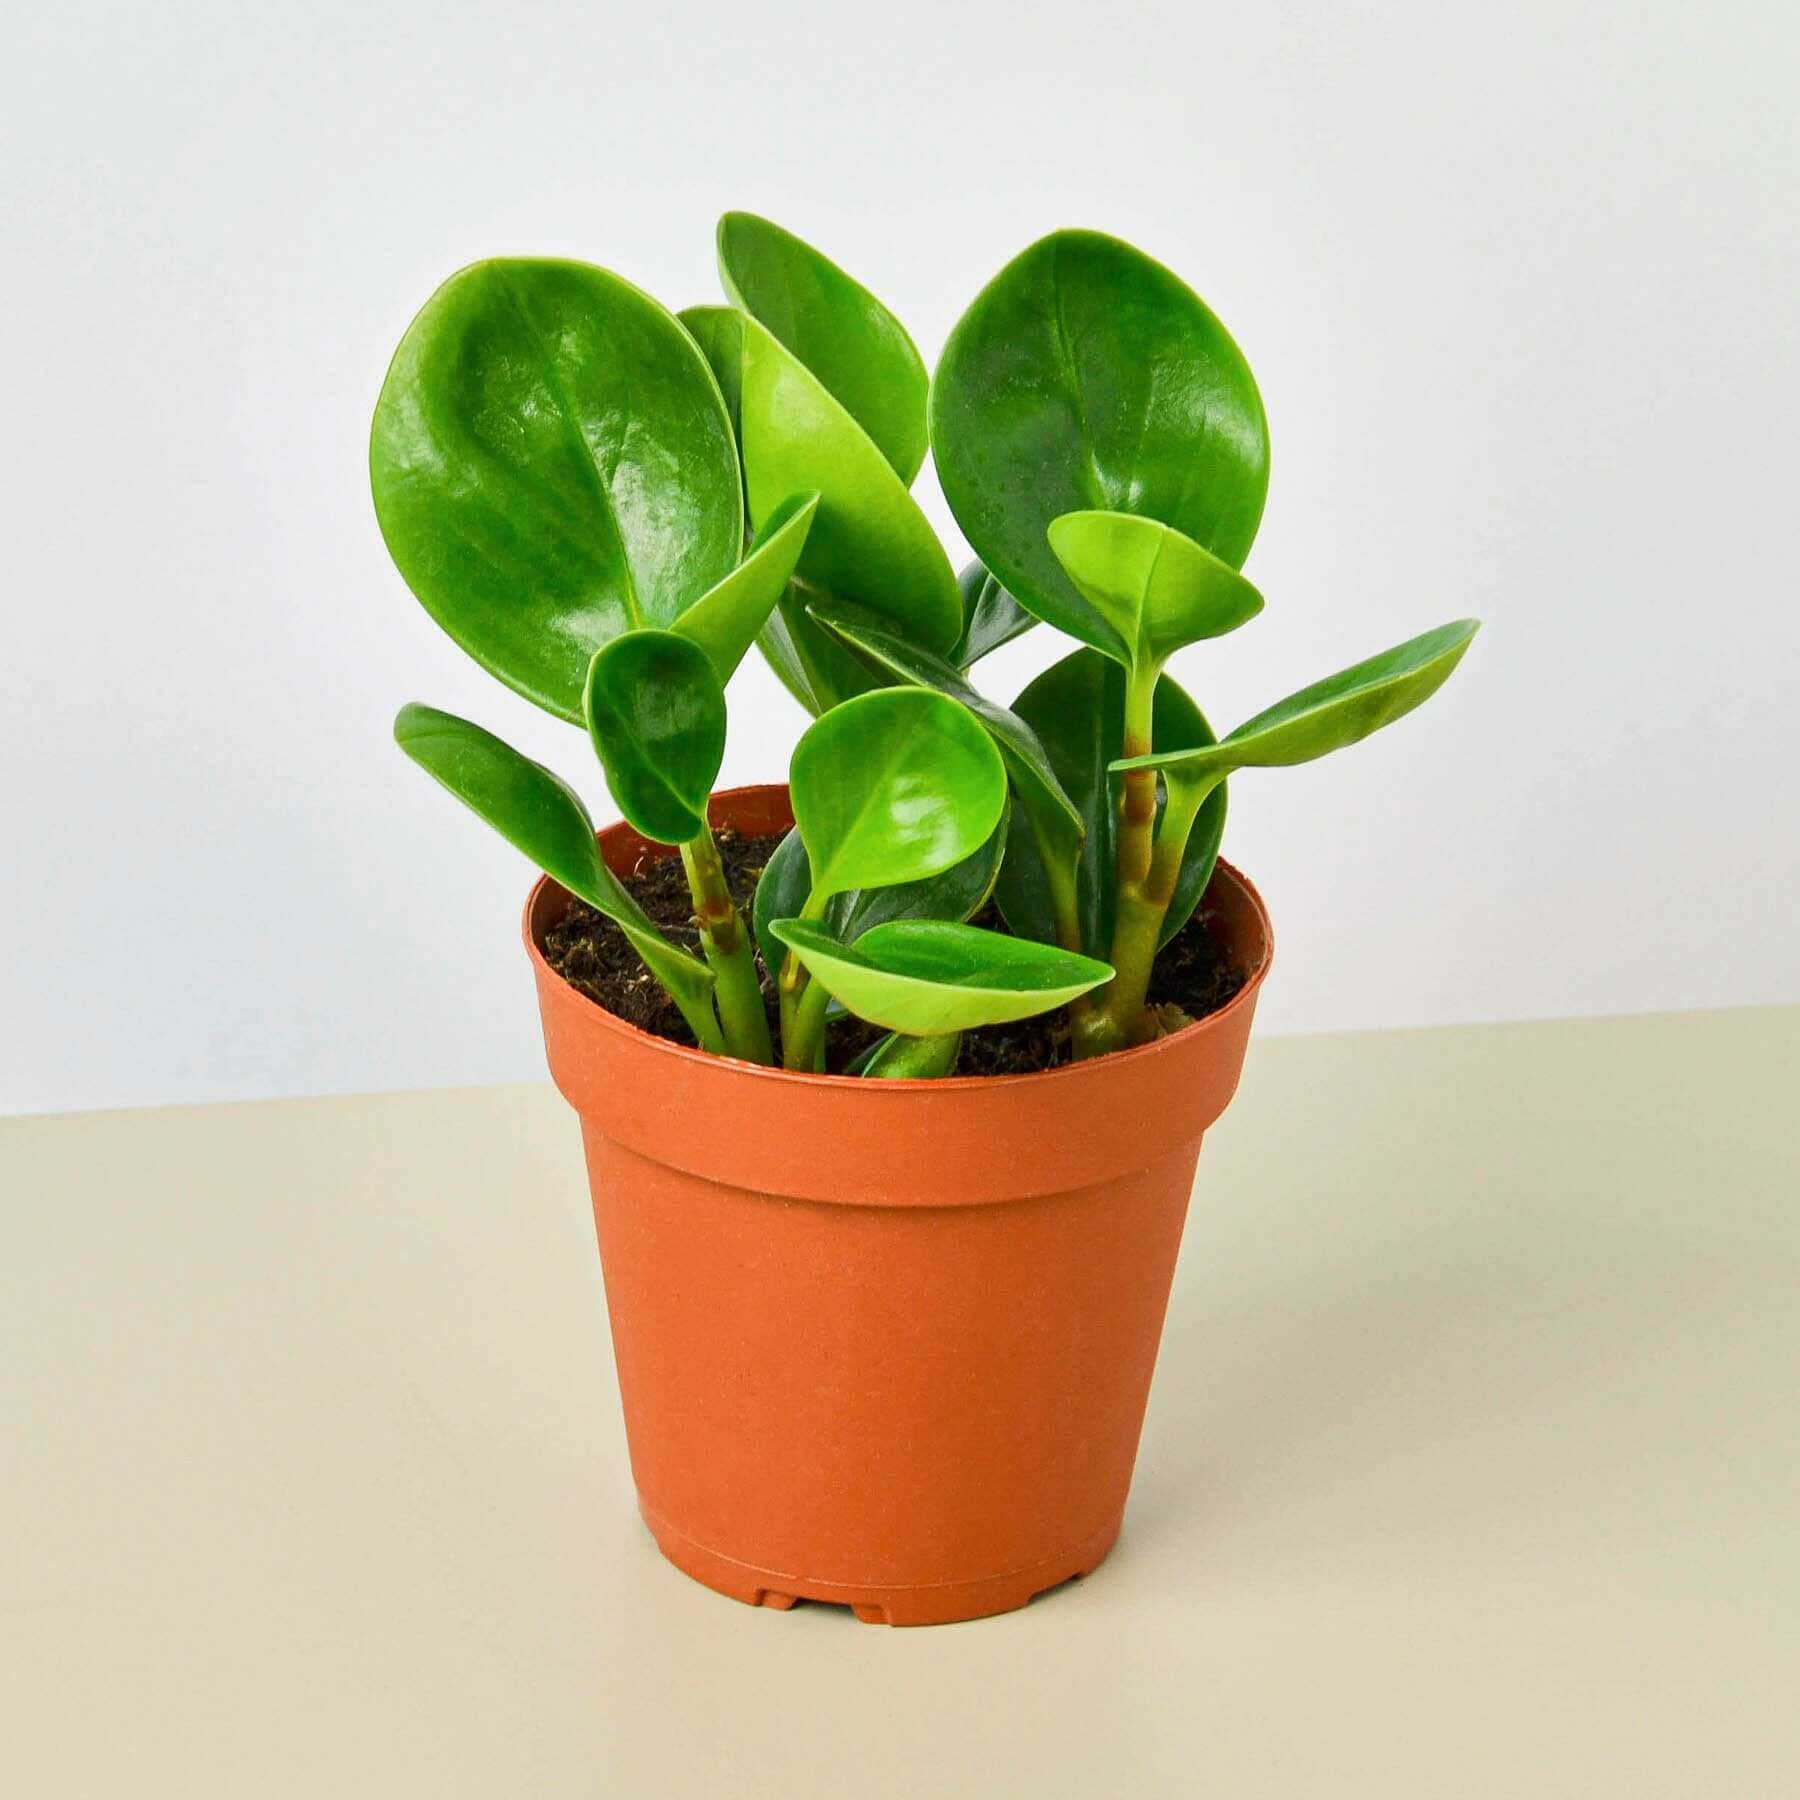 Peperomia Obtusifolia | Modern house plants that clean the air